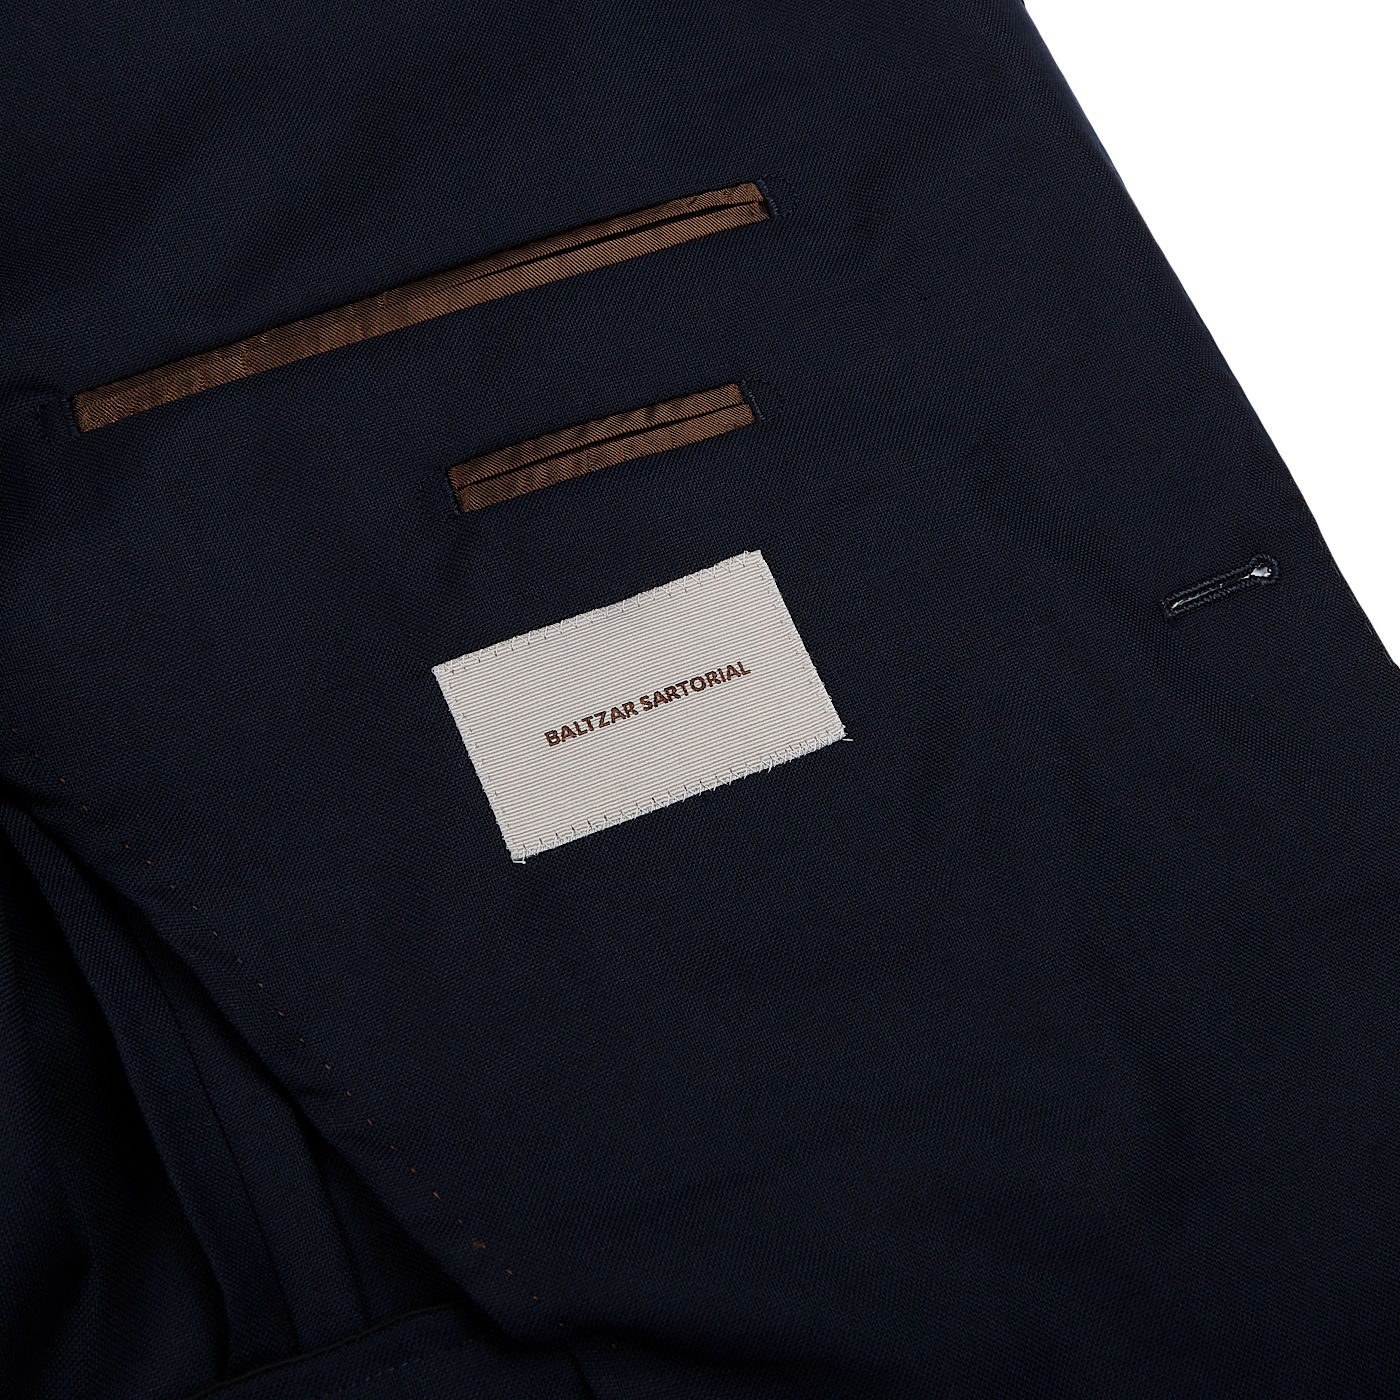 Baltzar Sartorial Navy Super 100's Wool Suit Jacket Inside